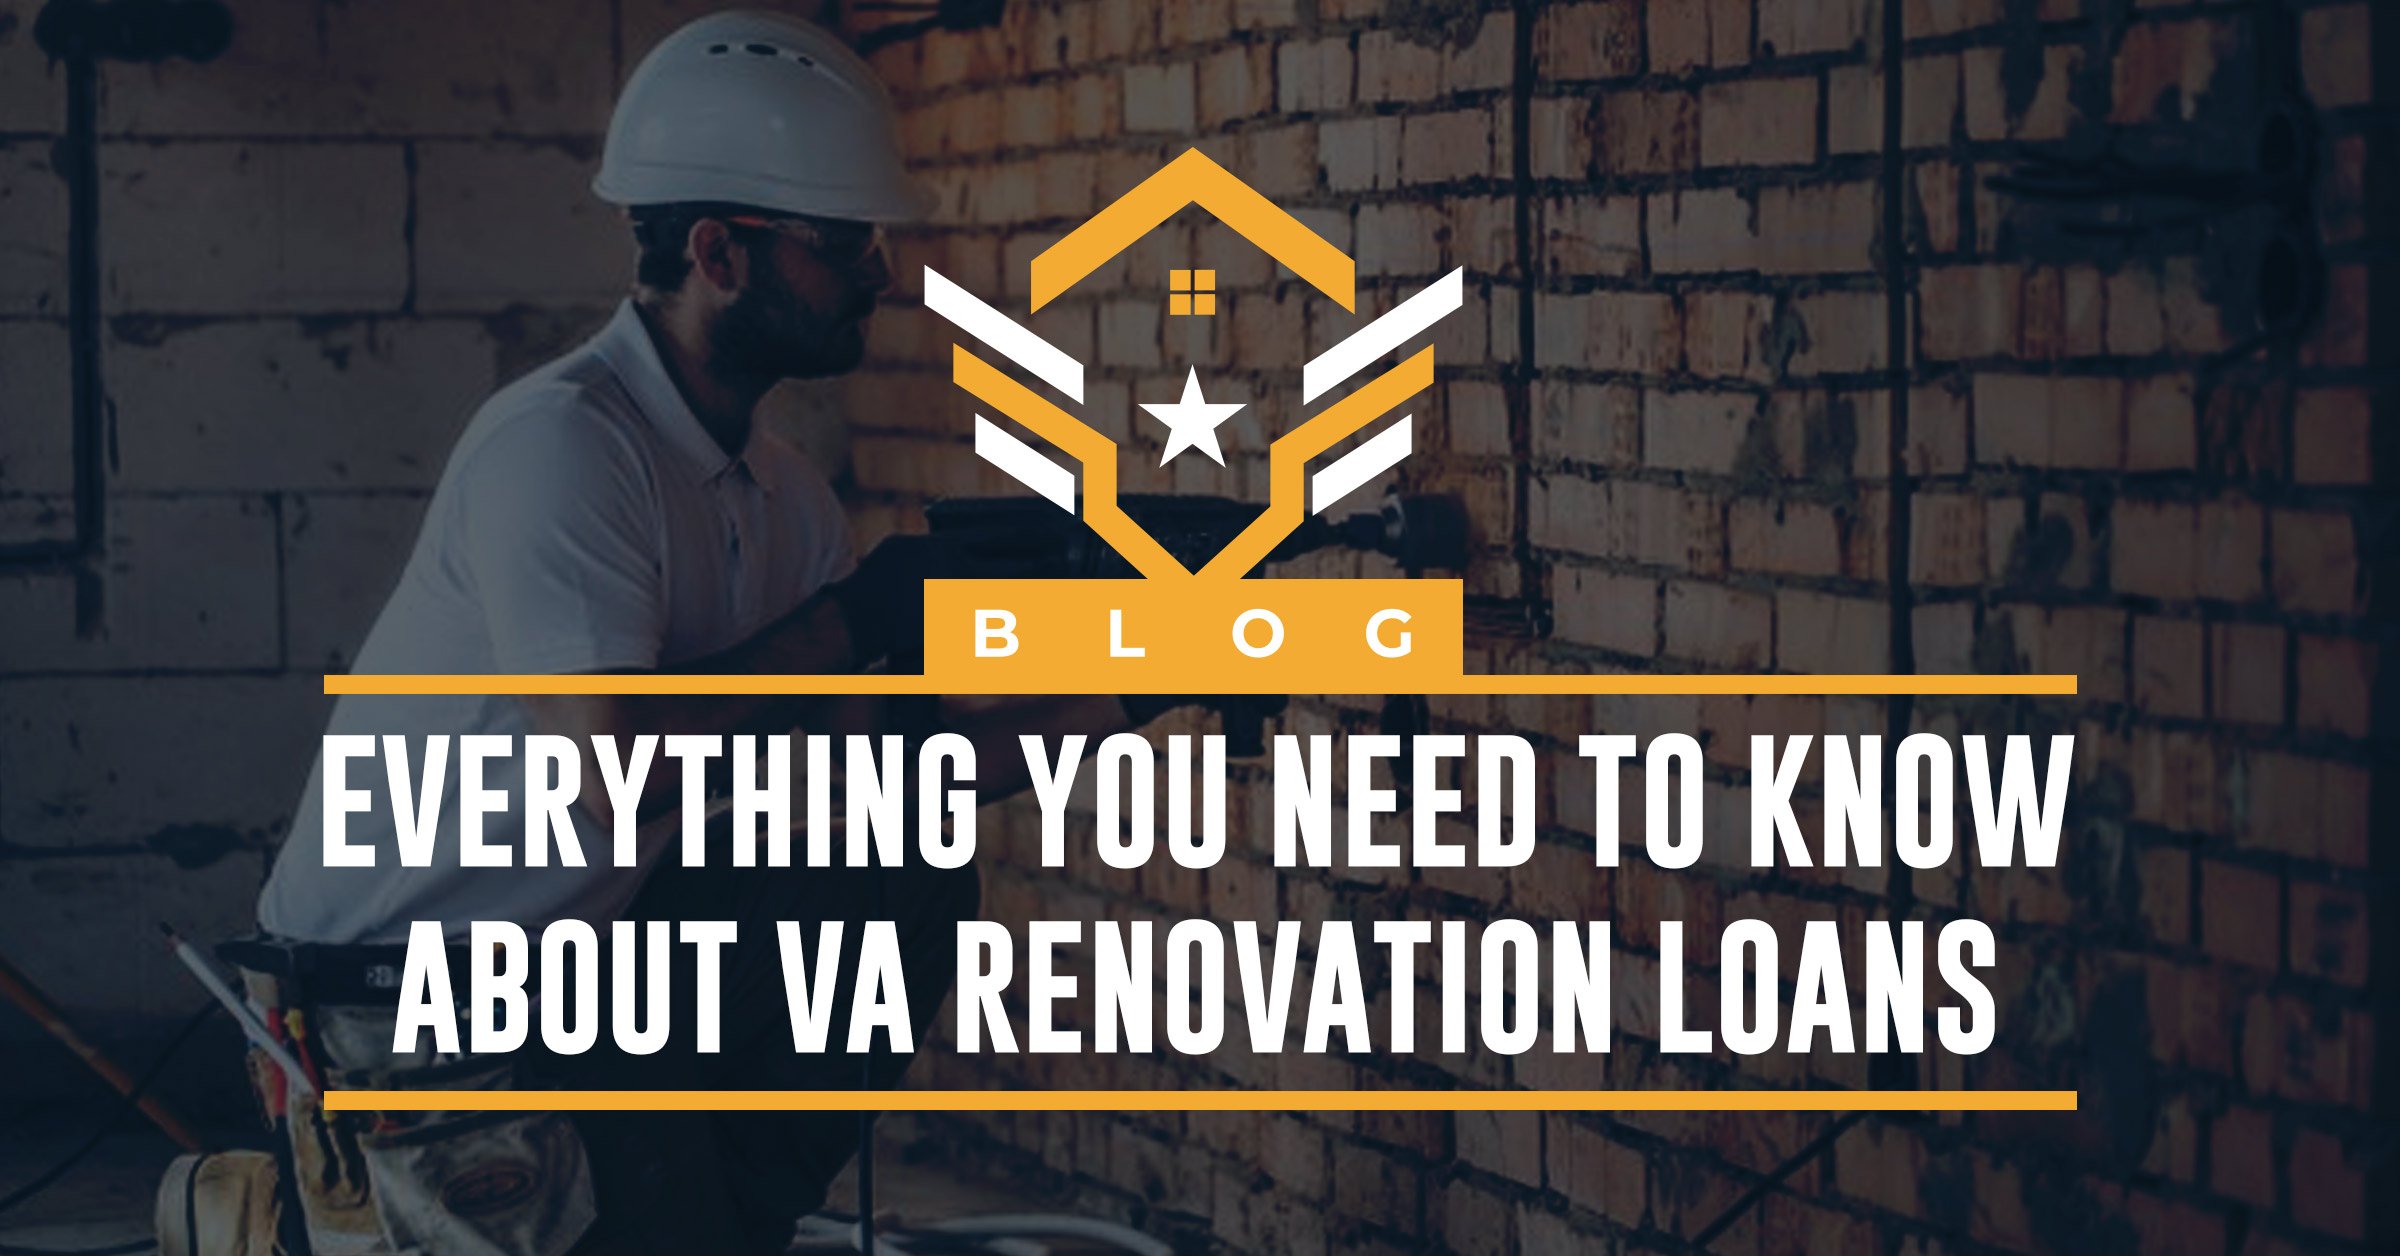 VA renovation loan